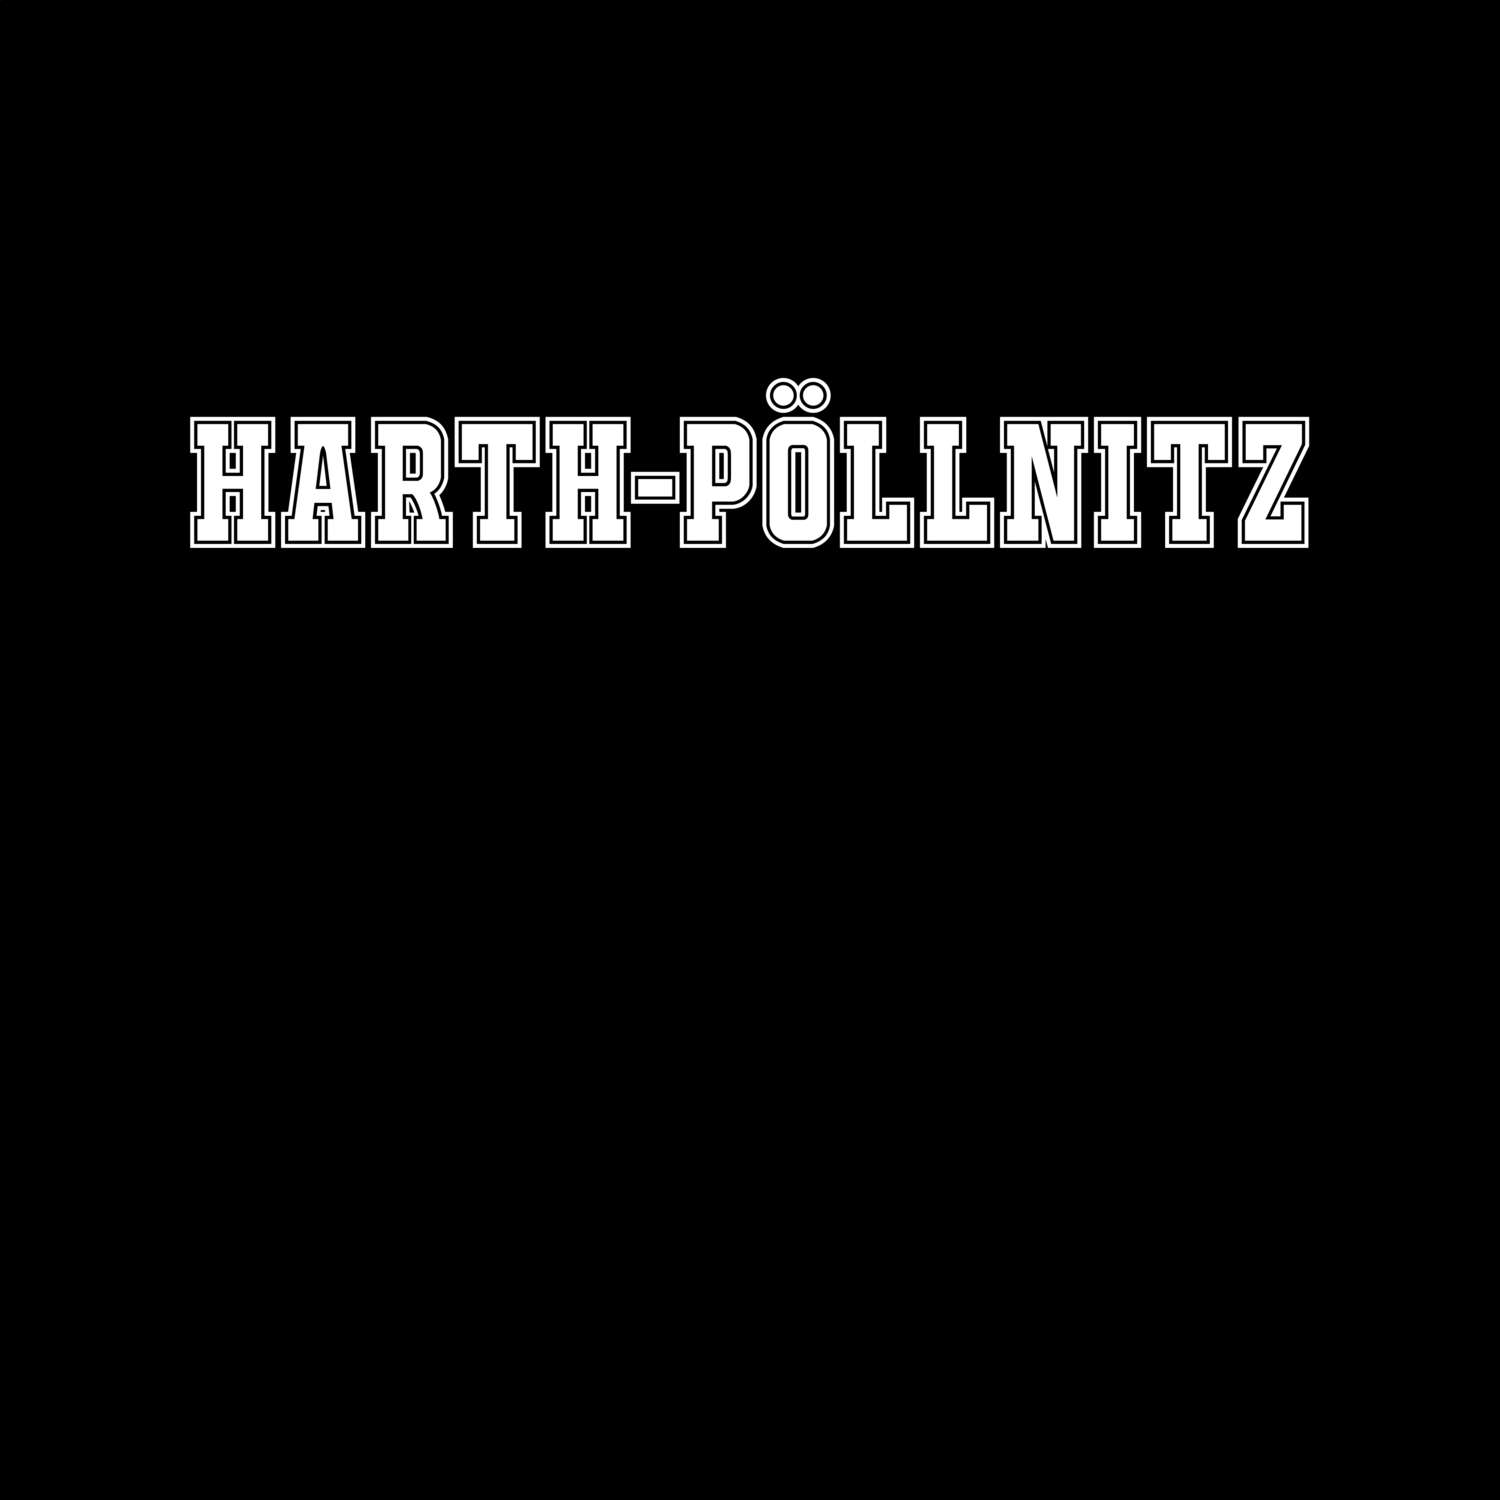 Harth-Pöllnitz T-Shirt »Classic«